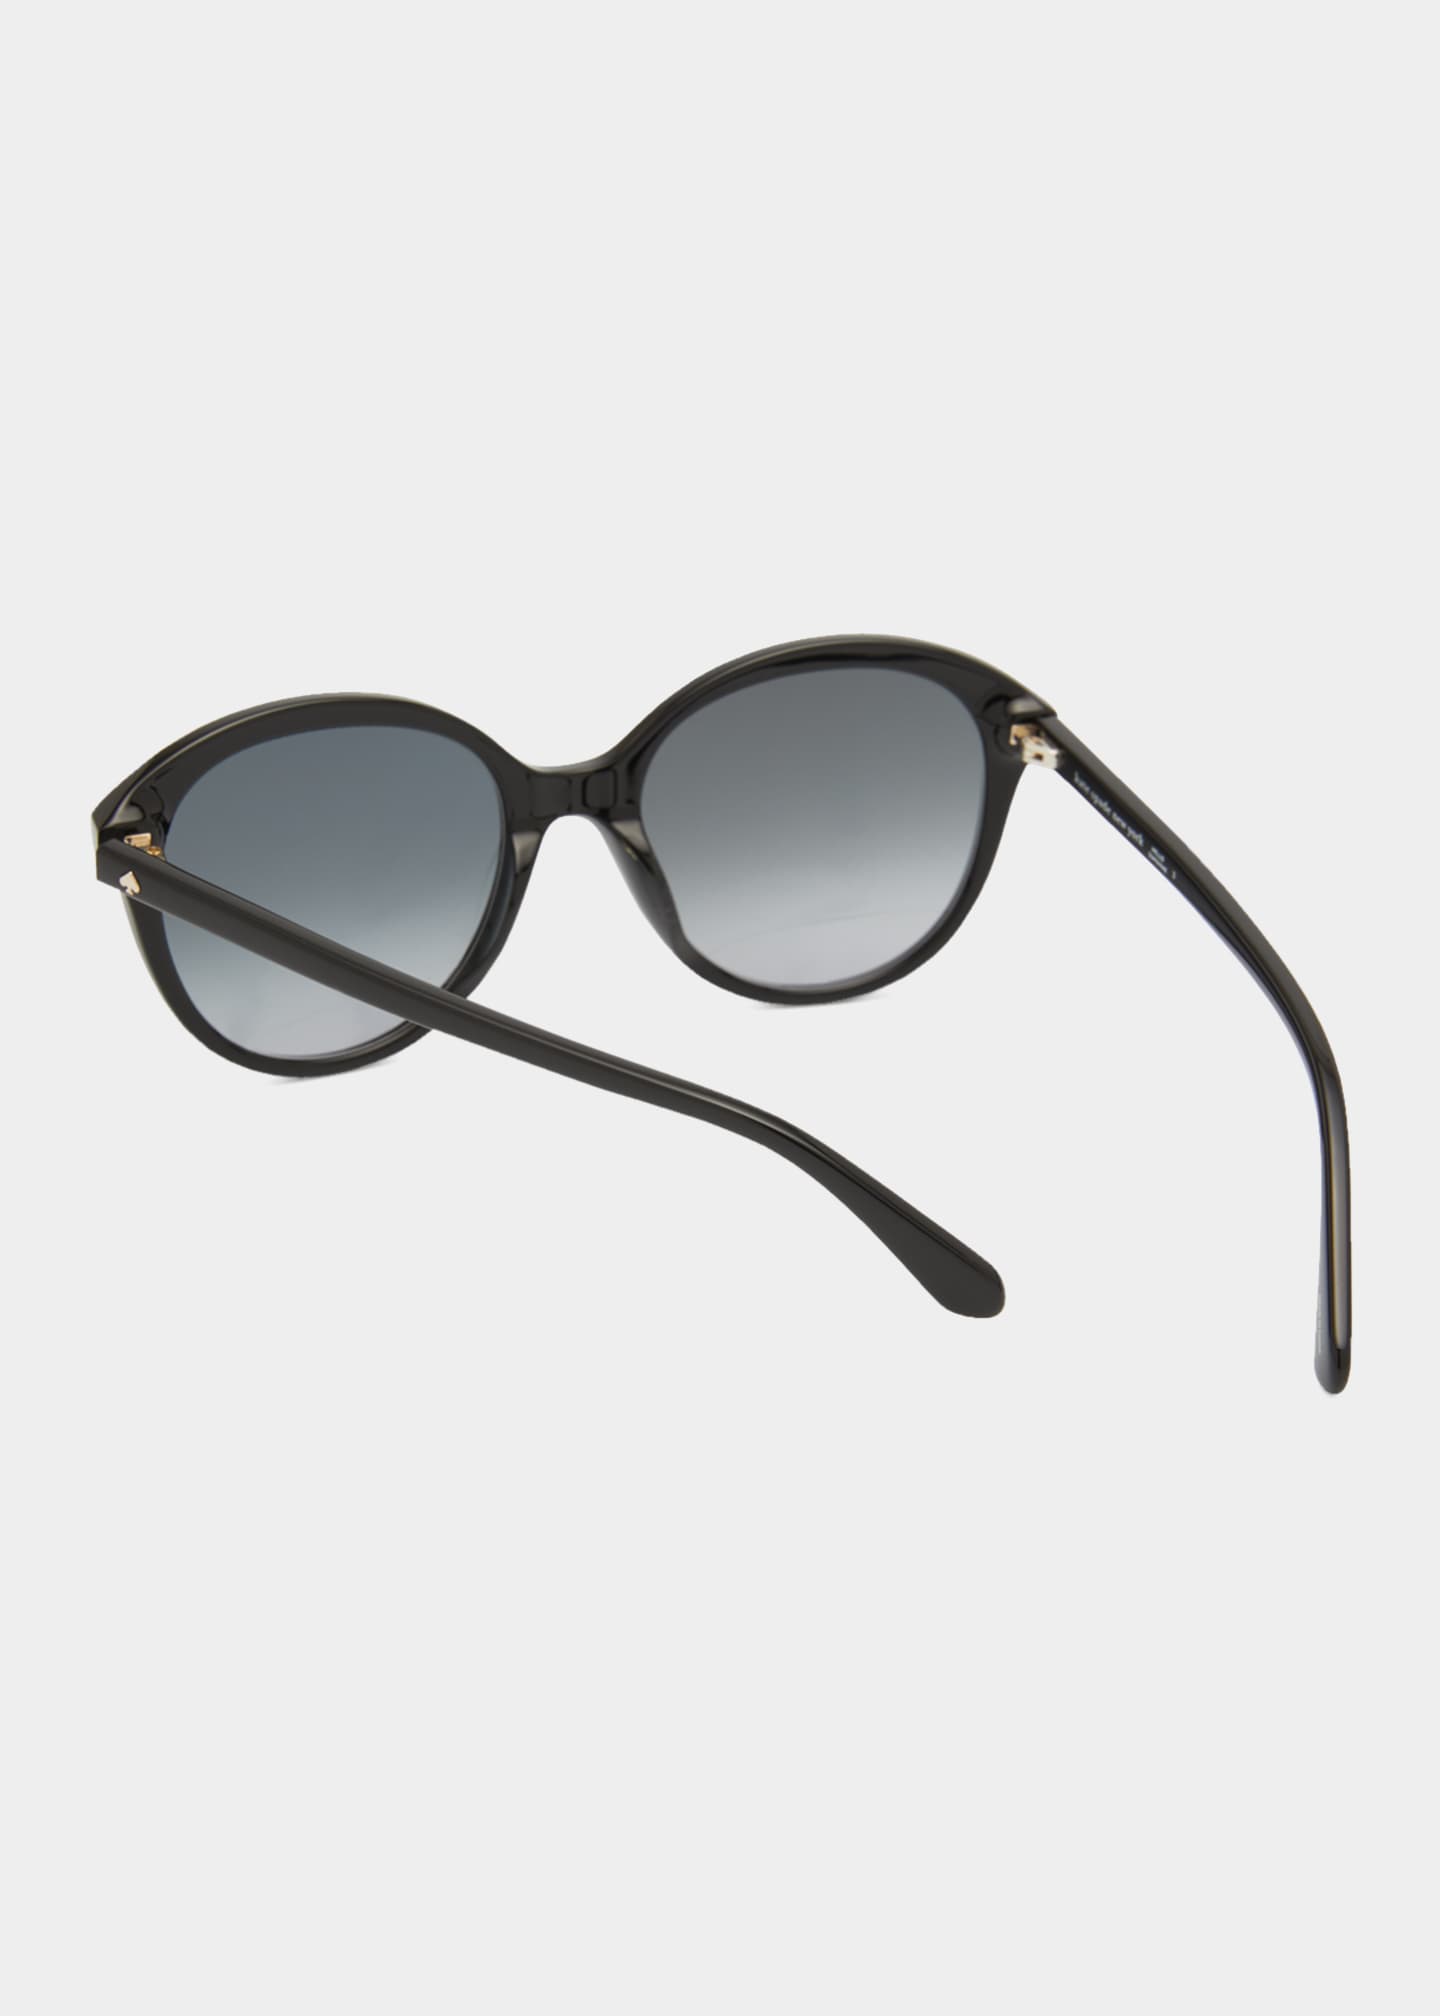 kate spade new york bria round acetate sunglasses - Bergdorf Goodman